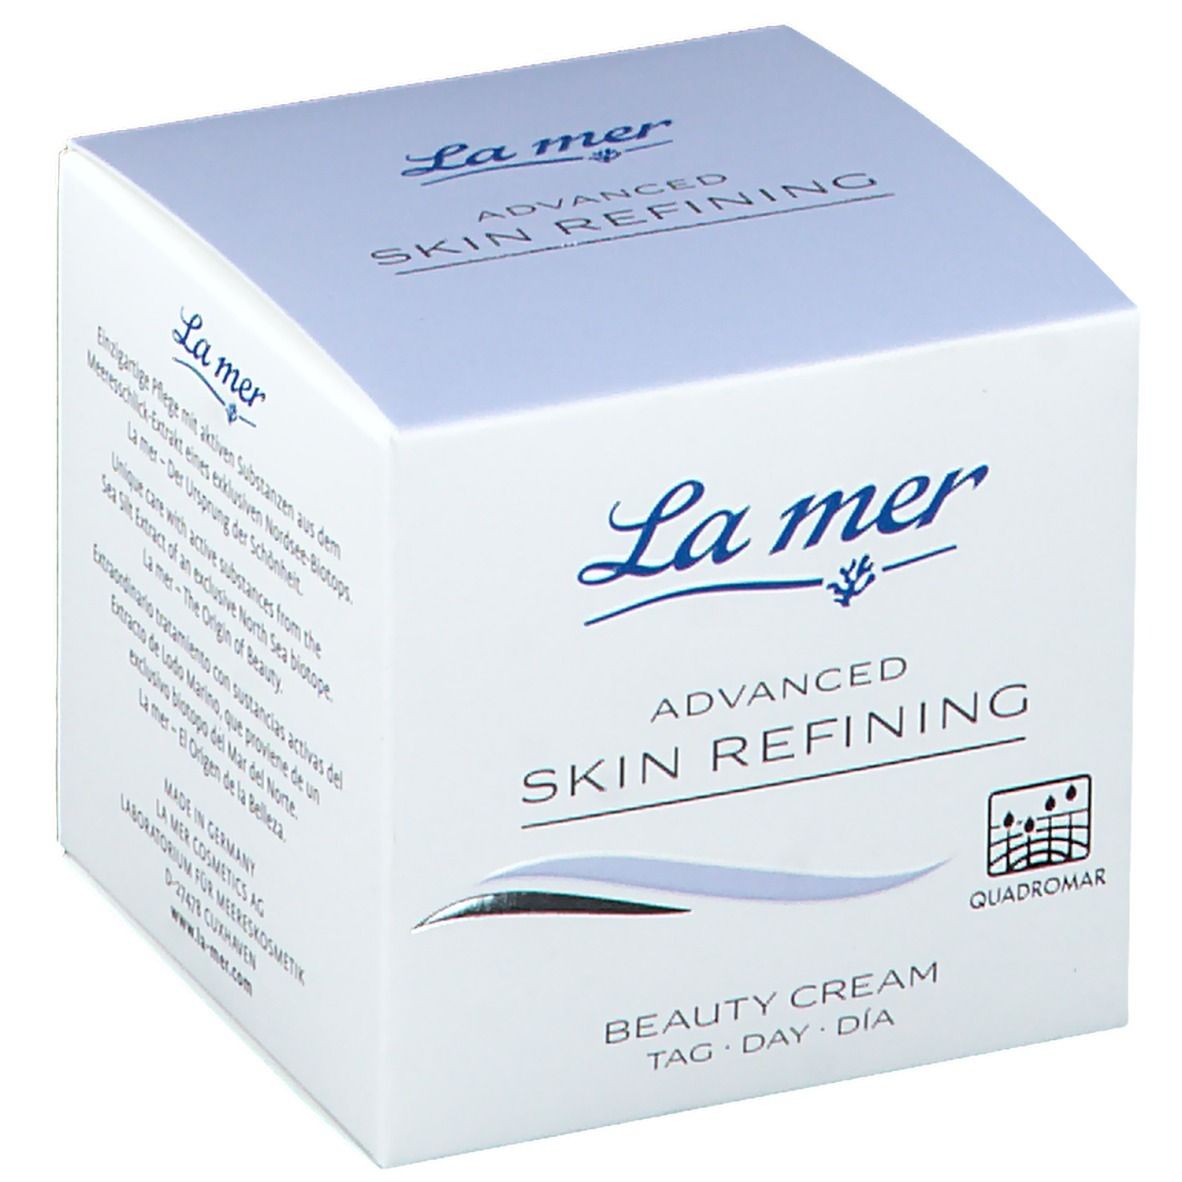 La mer Advanced Skin Refining Beauty Tagescreme